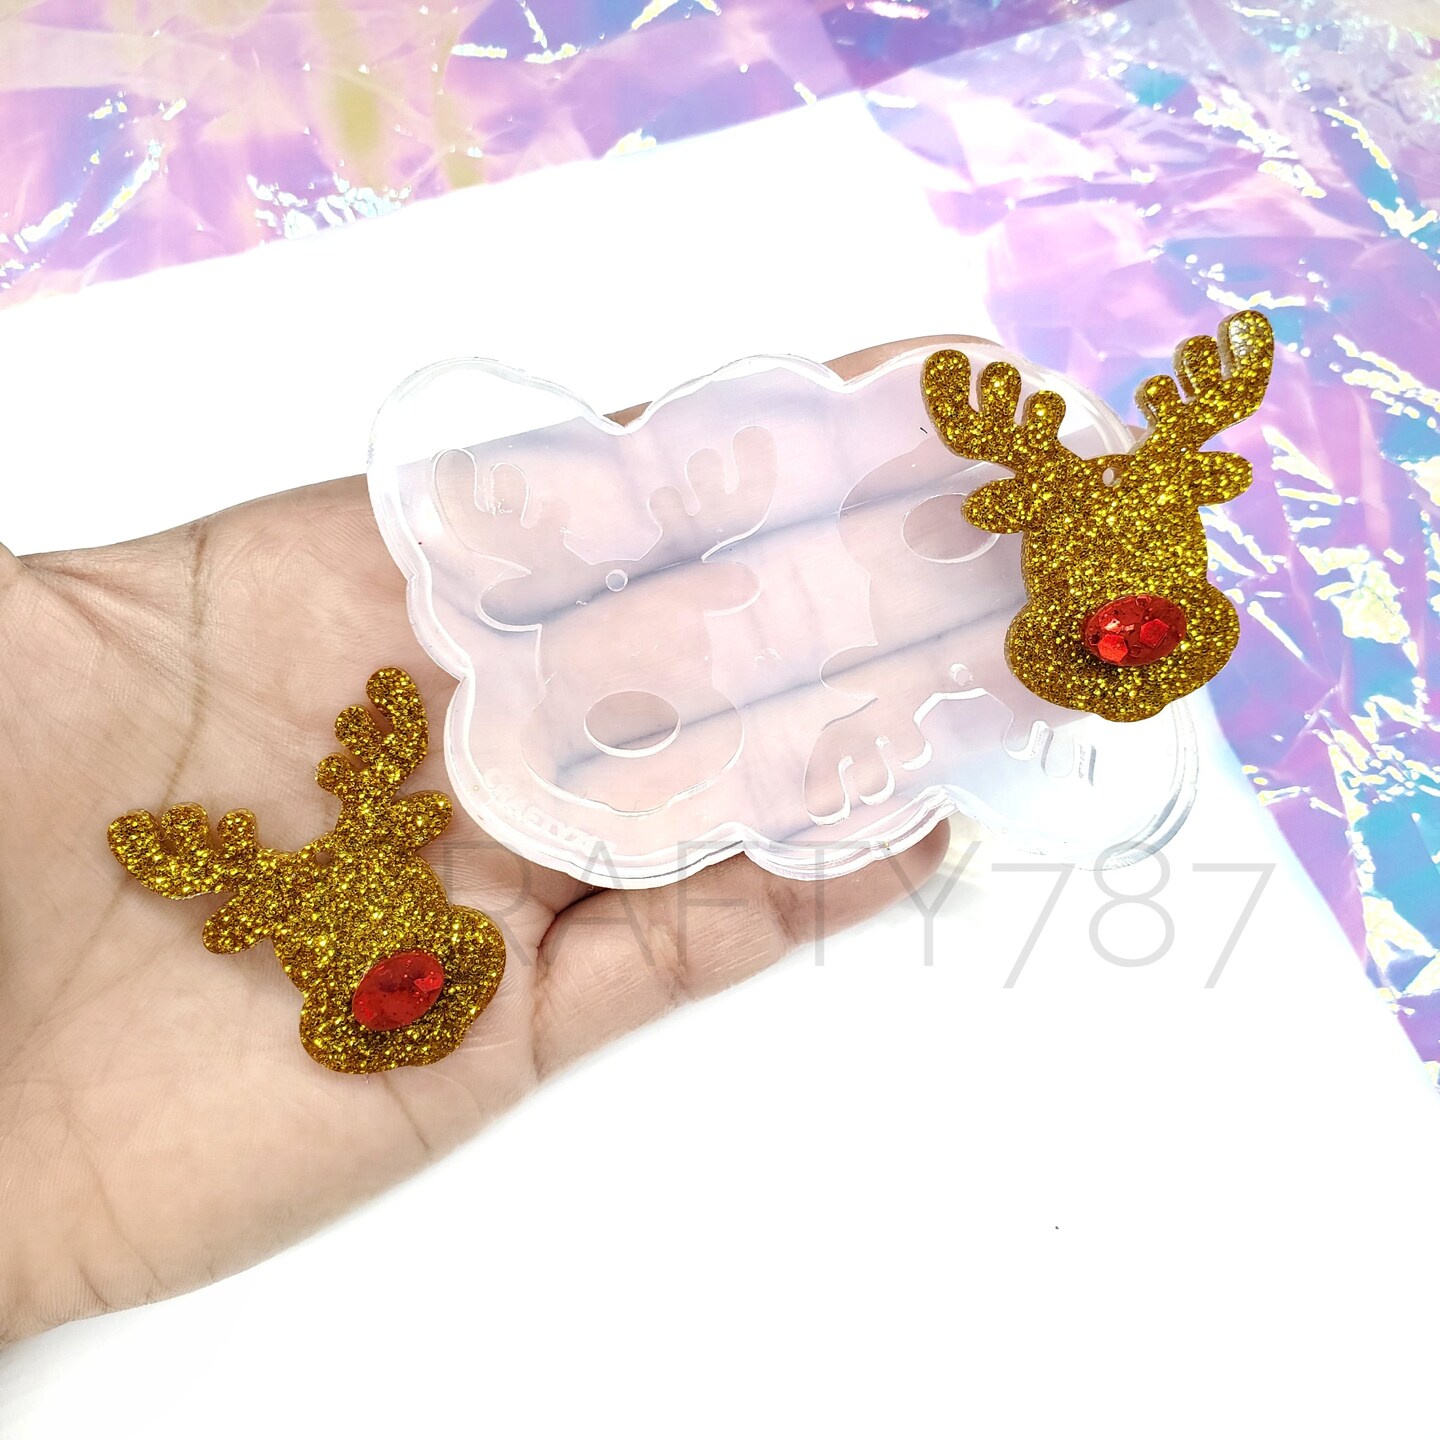 Resin Molds Christmas Earrings Reindeer Earrings Molds Silicone